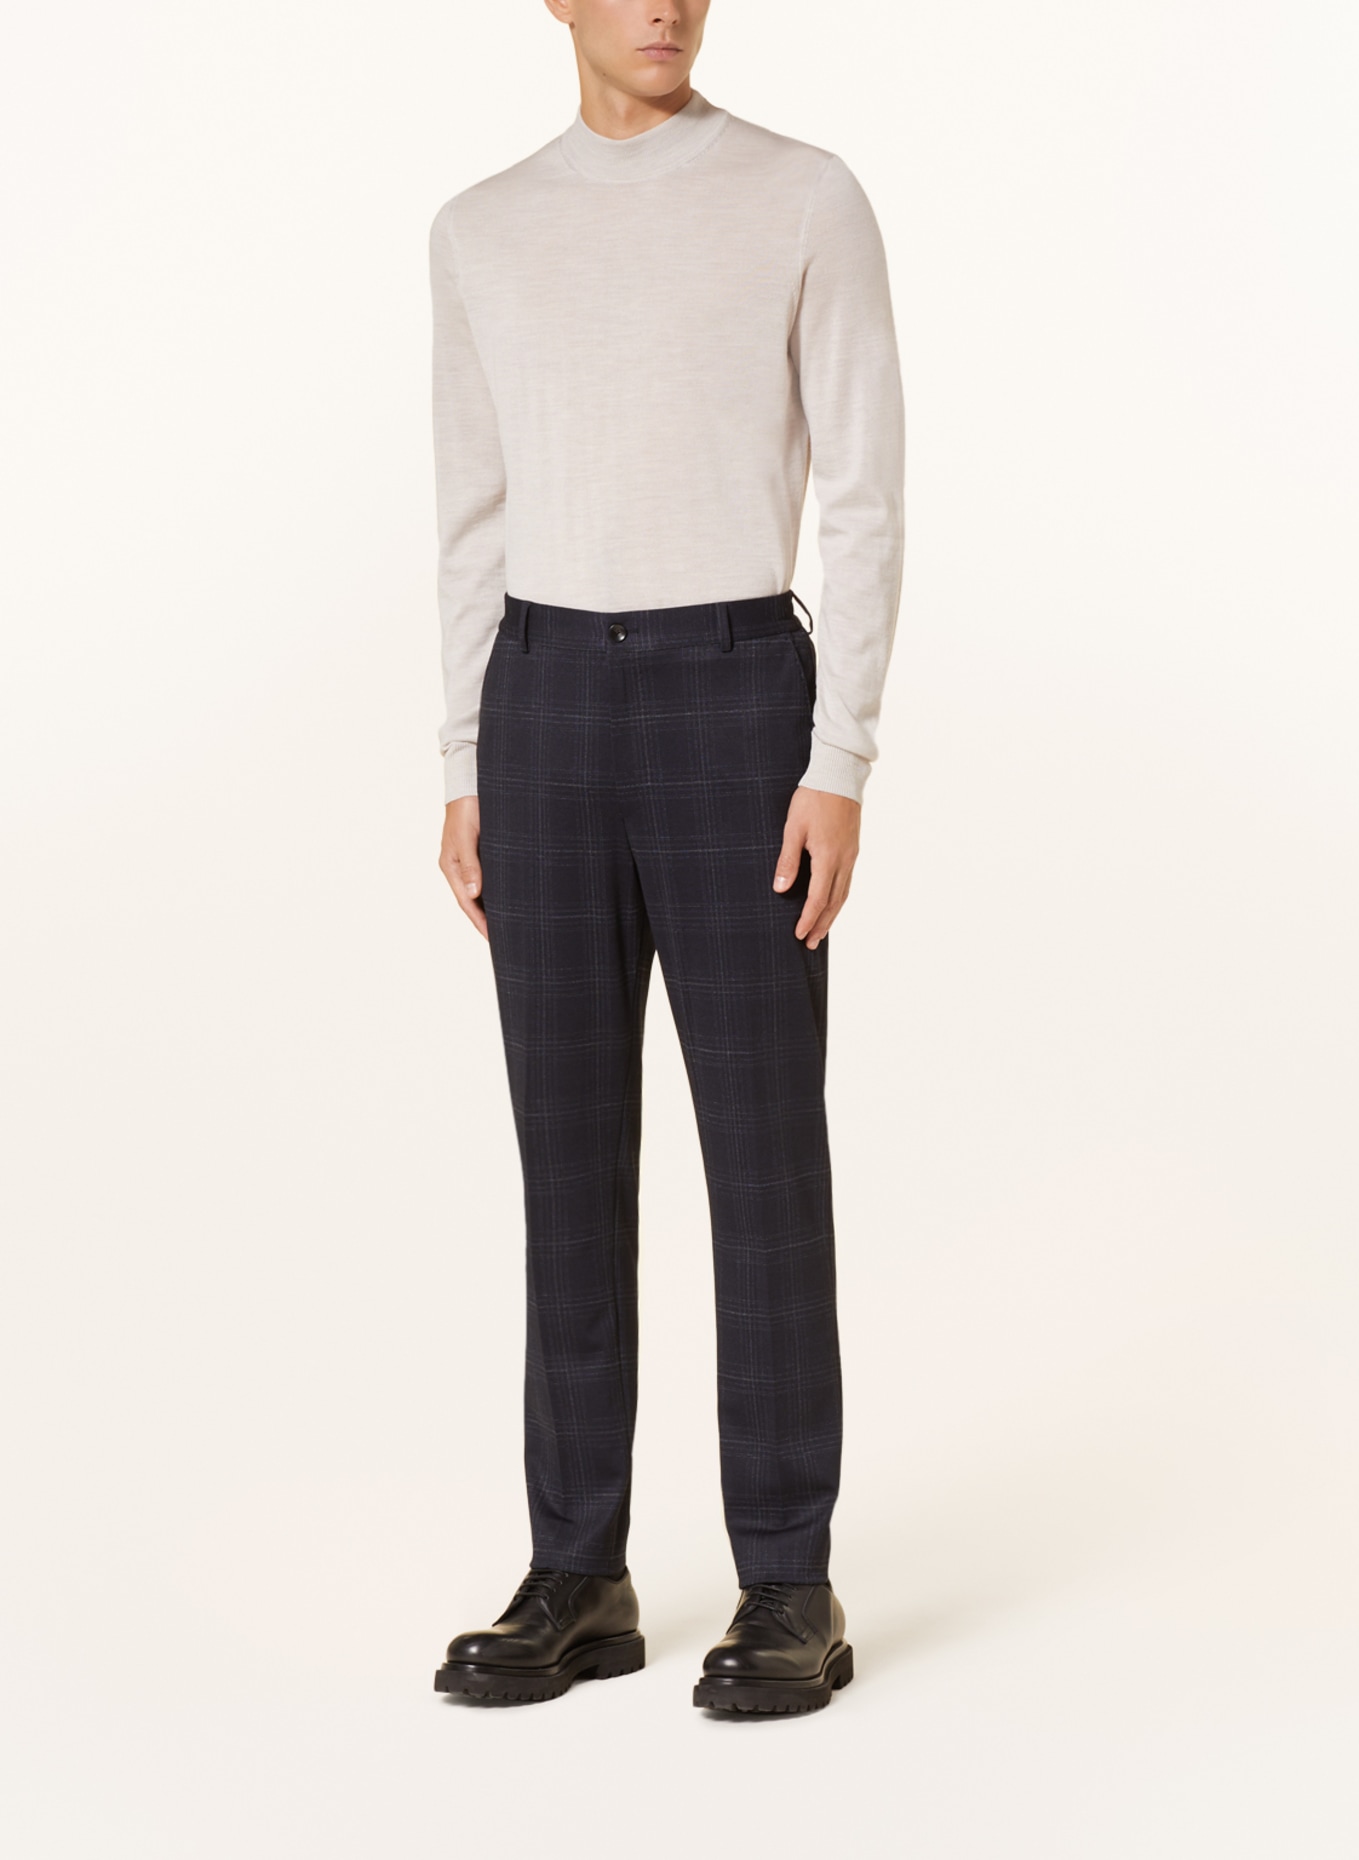 JOOP! Suit trousers BAXX slim fit in jersey, Color: 405 Dark Blue                  405 (Image 3)